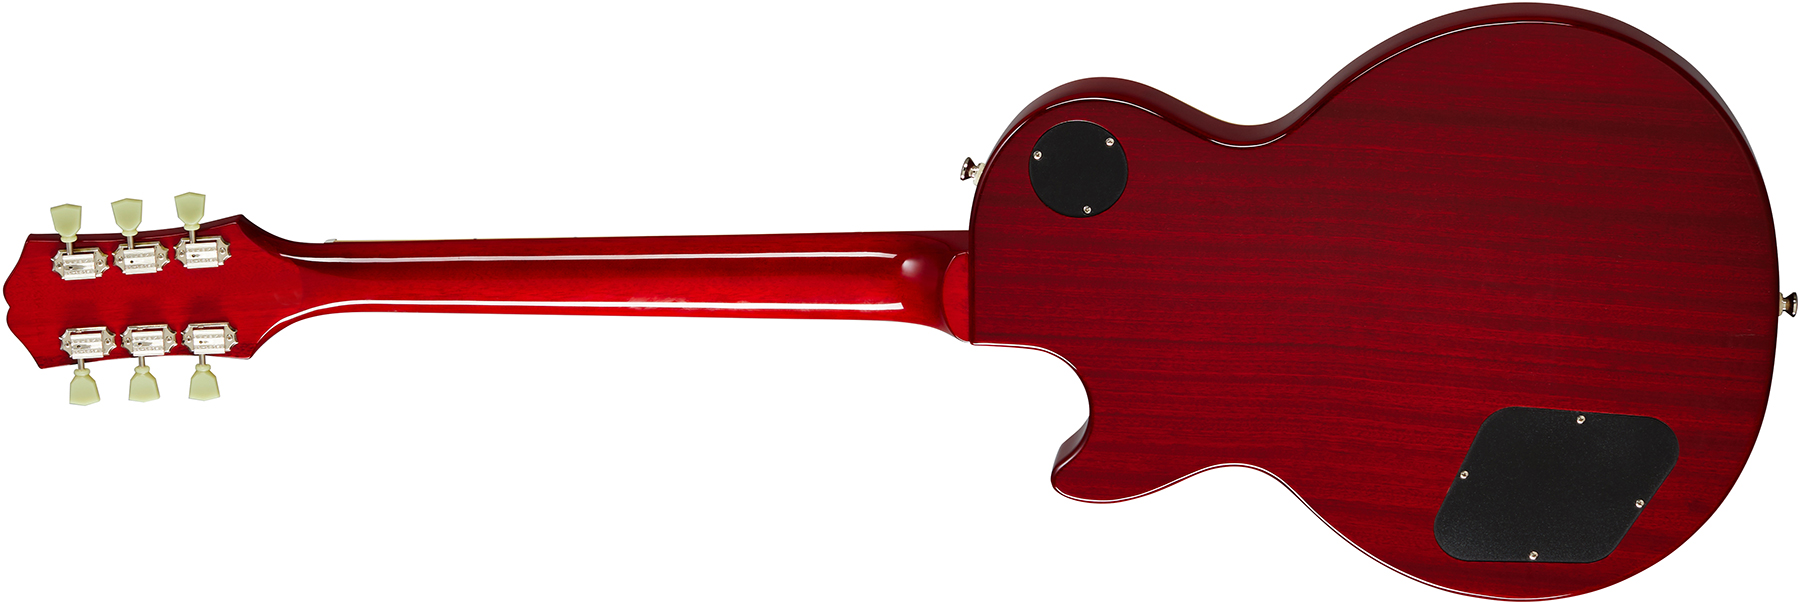 Epiphone Les Paul Standard 50s Lh Gaucher 2h Ht Rw - Vintage Sunburst - Left-handed electric guitar - Variation 1